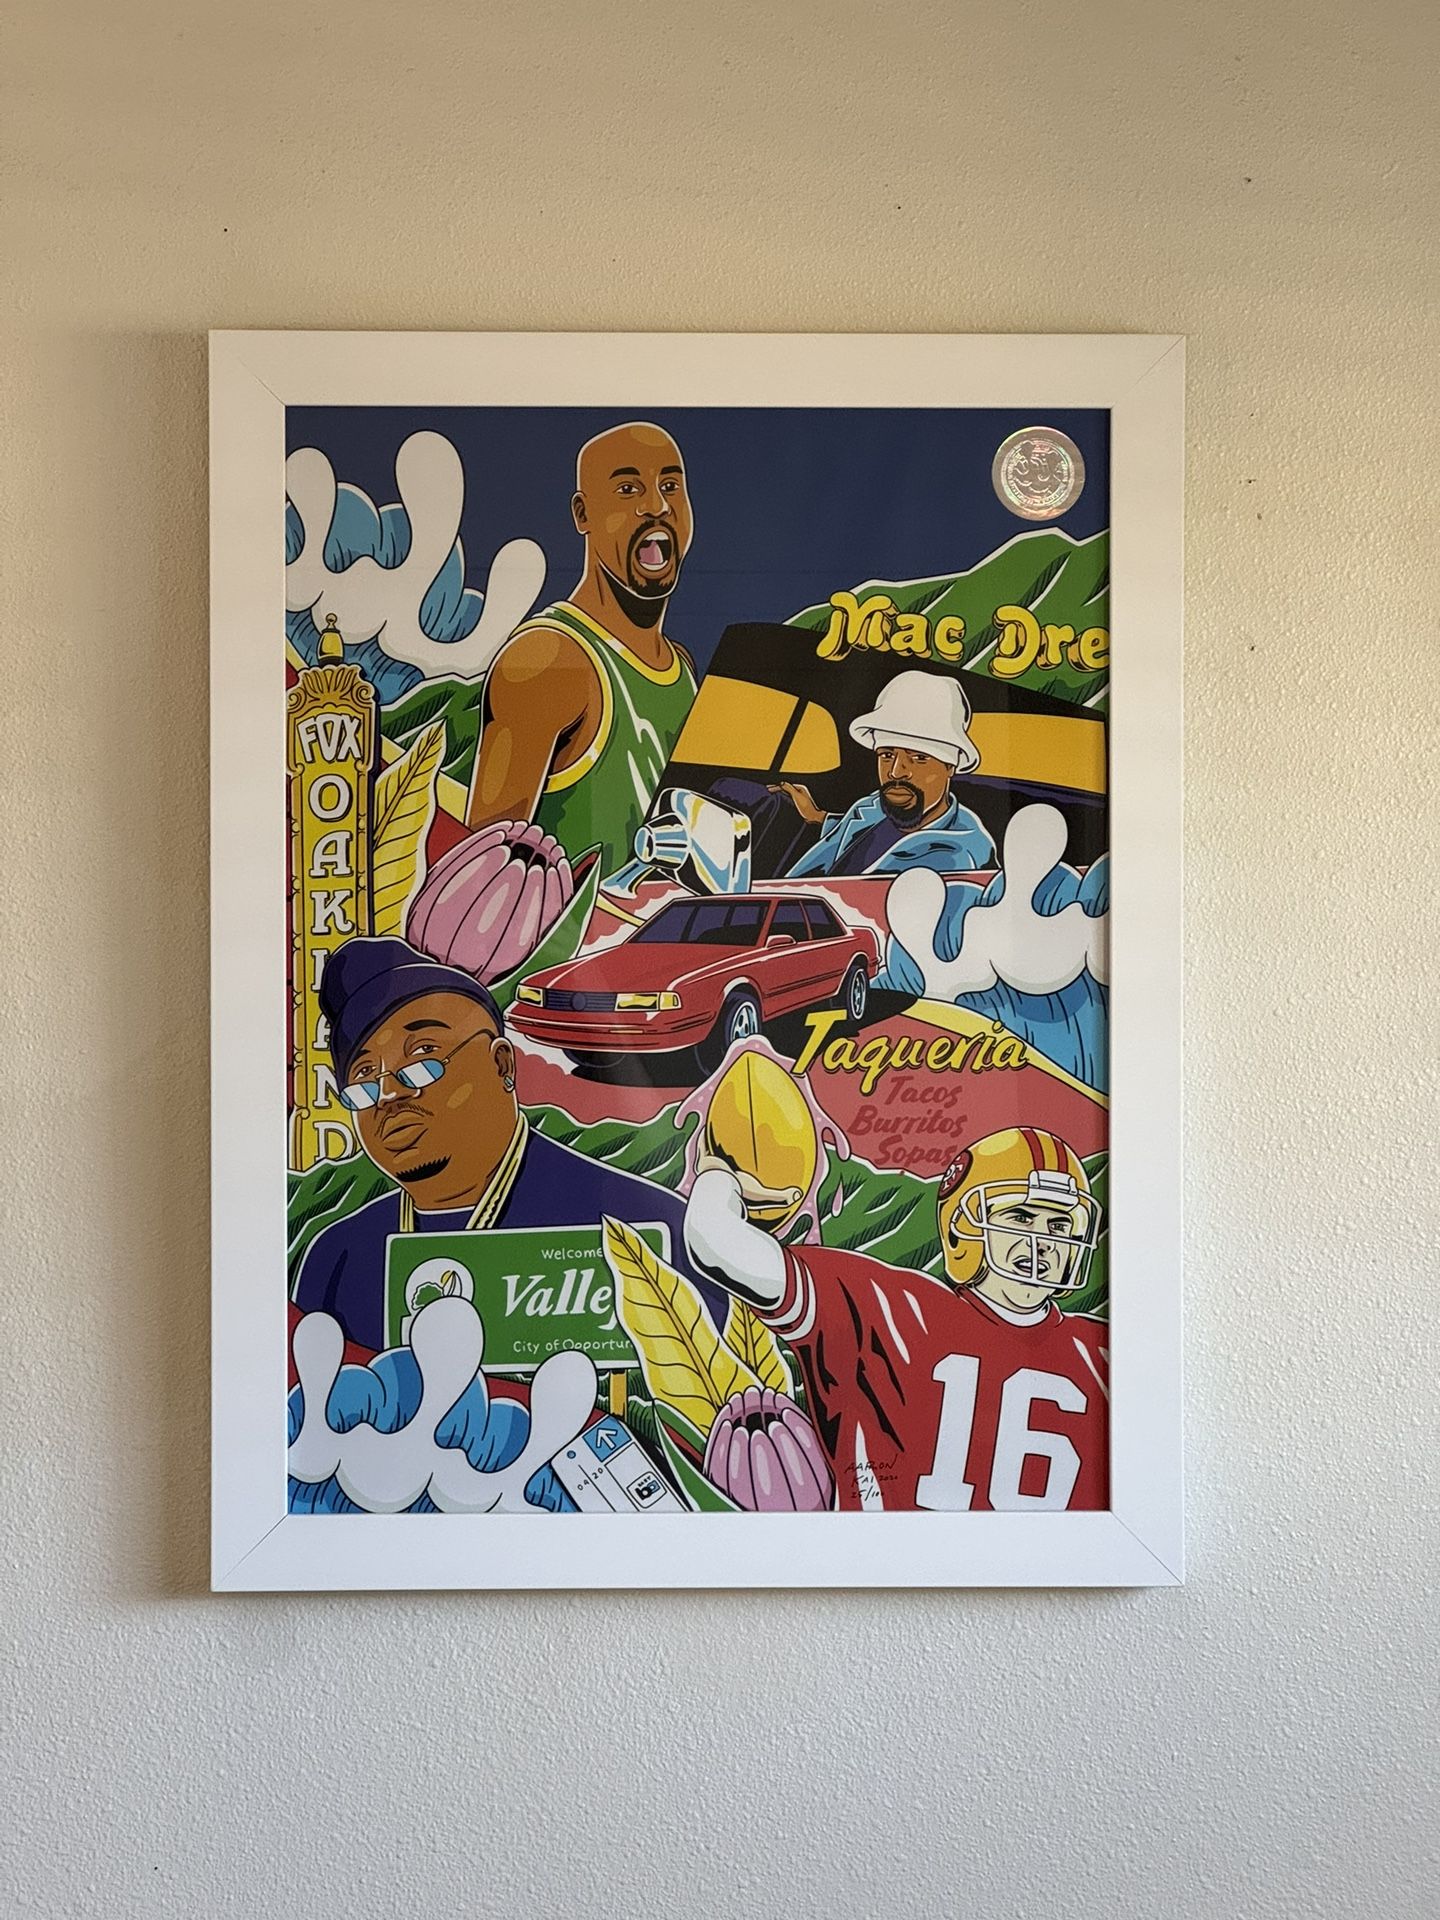 Aaron Kai - “Bay Area Legends” Print (framed)